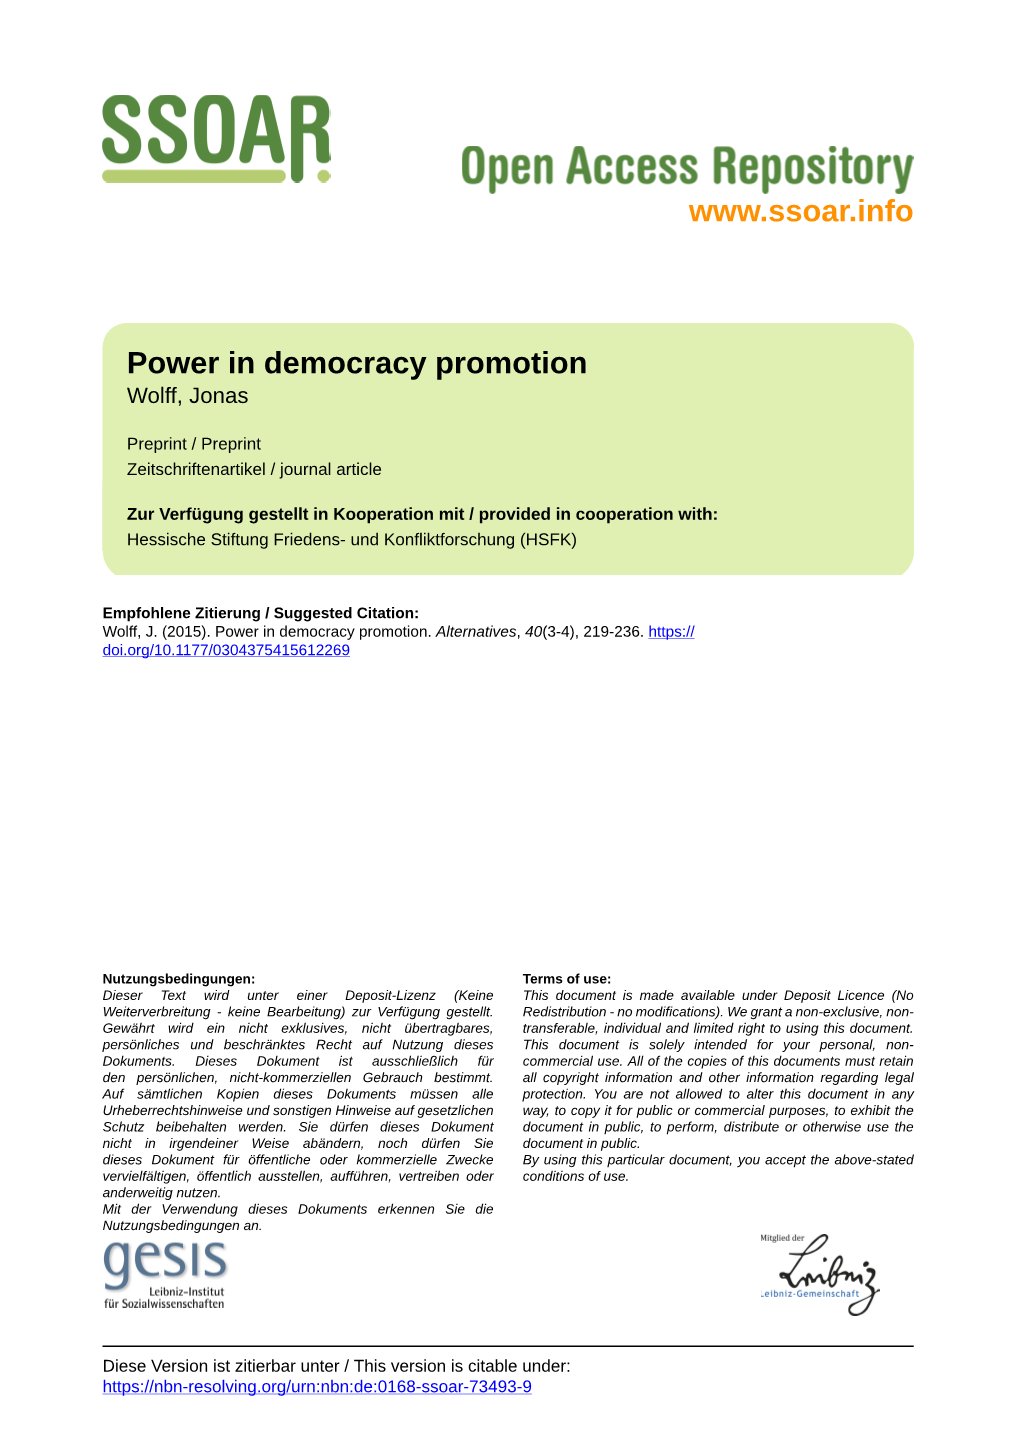 Power in Democracy Promotion Wolff, Jonas